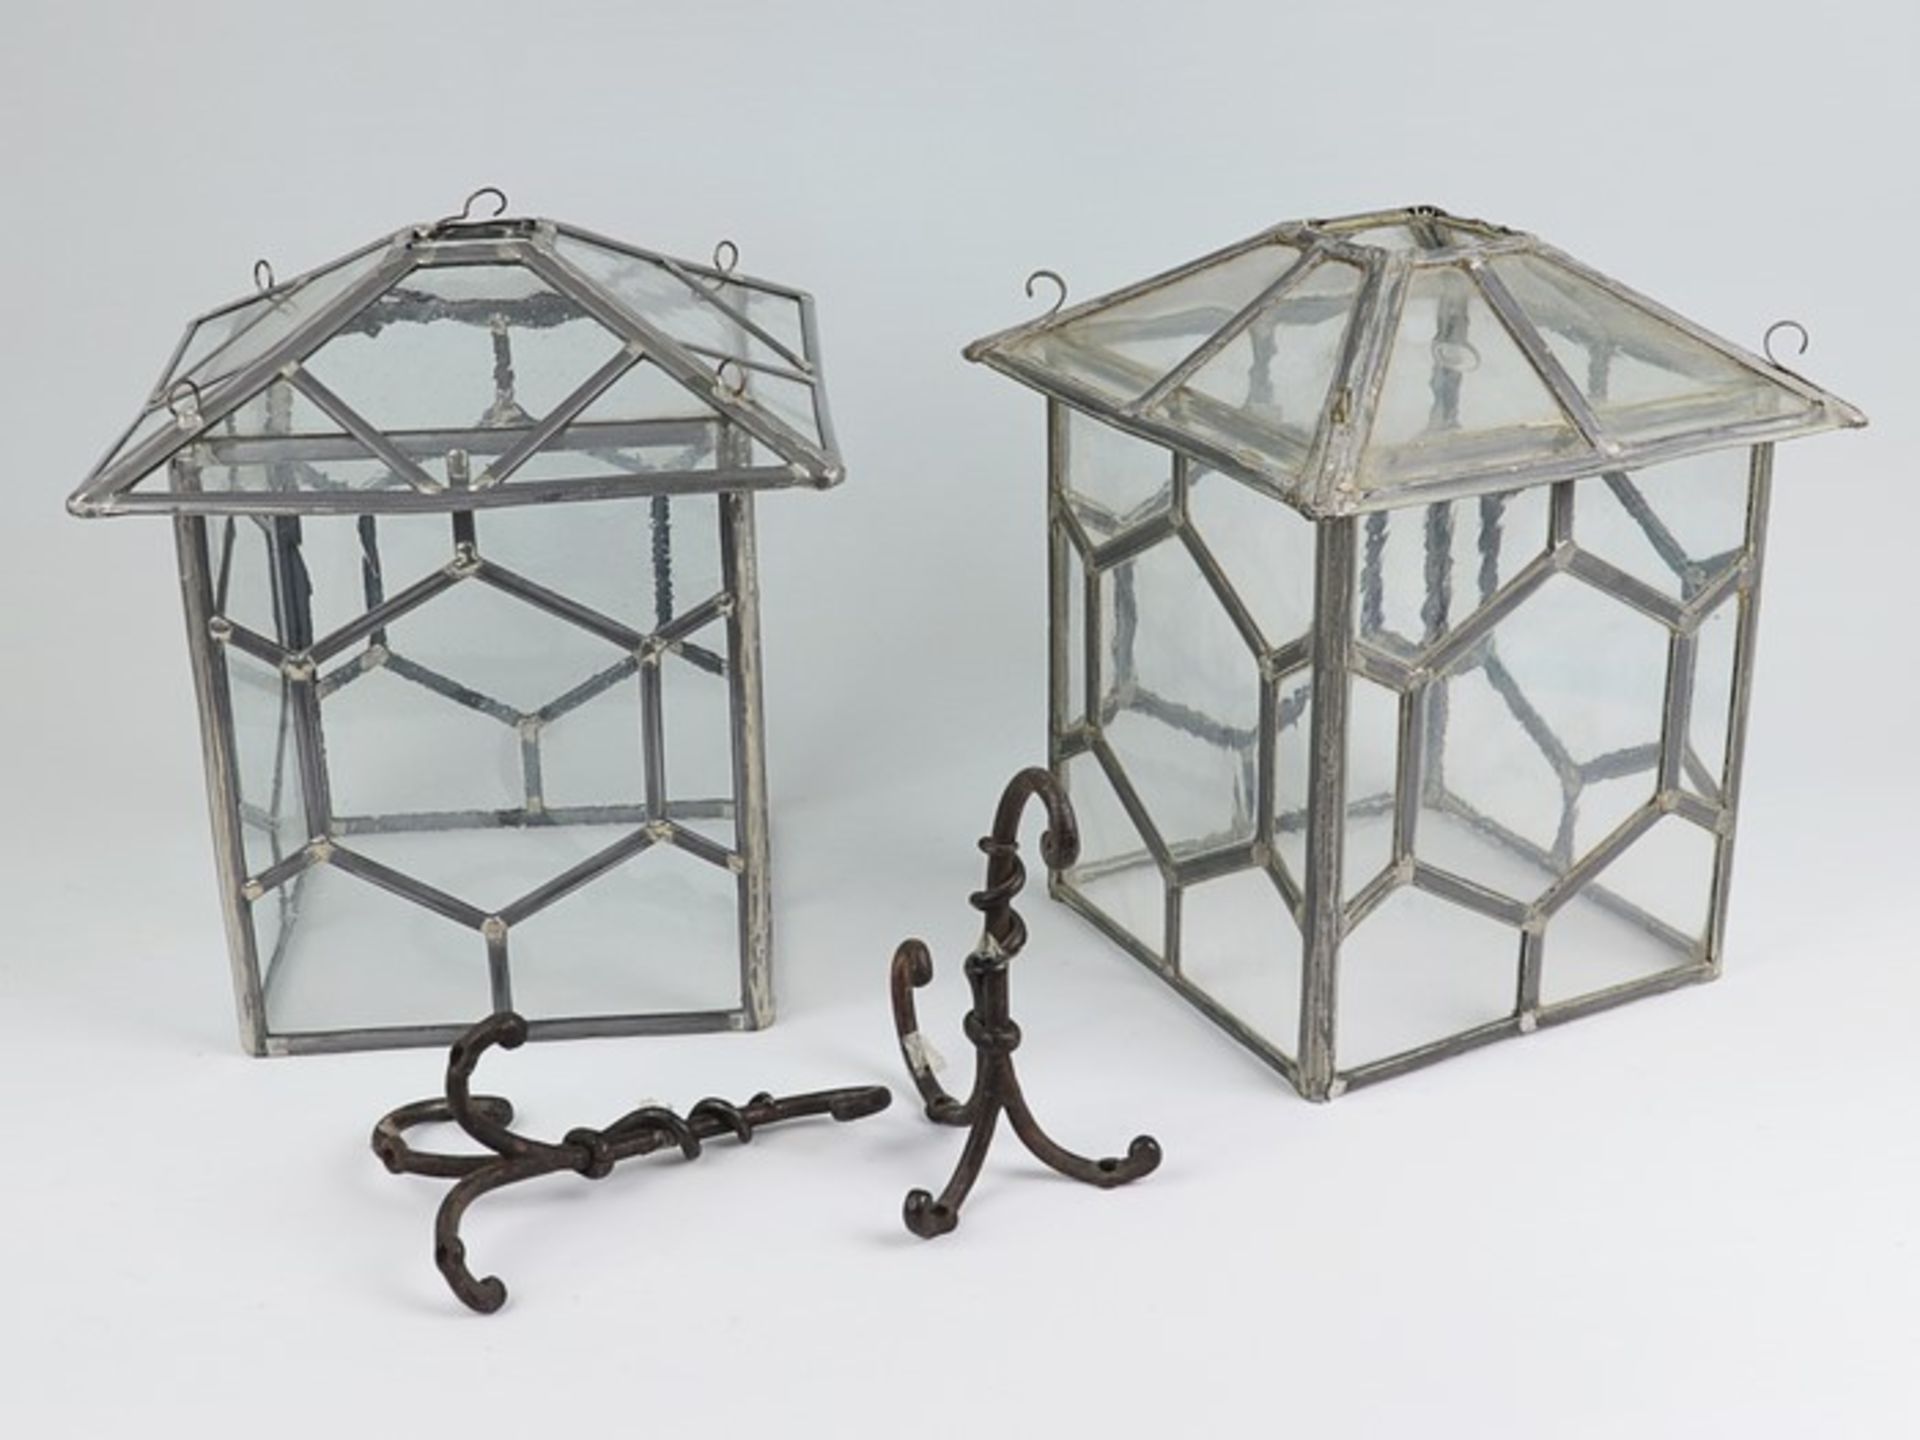 Deckenlaternen - PaarMetall/Glas, bleiverglaster Korpus, gitterförmiger polygonaler Bleidekor,